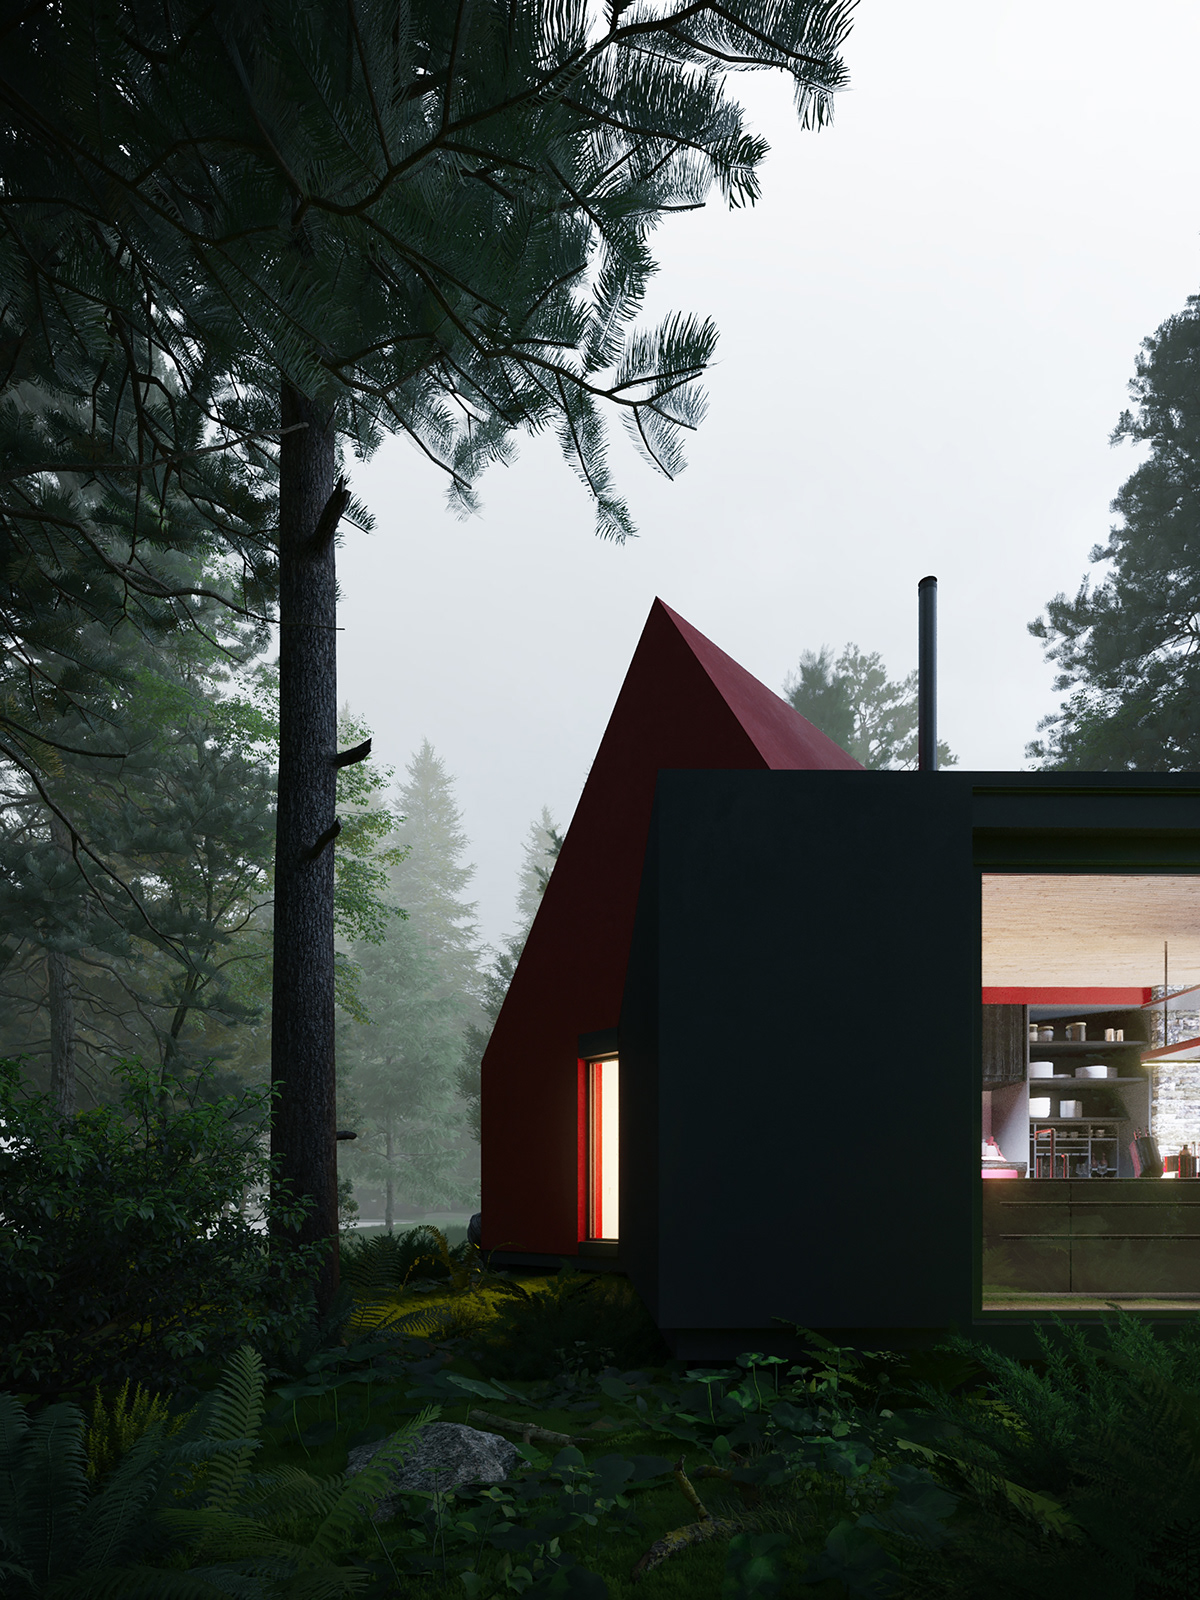 architecture minimalizm design visualization Render corona renderer forest modern house autodesk 3ds max CGI